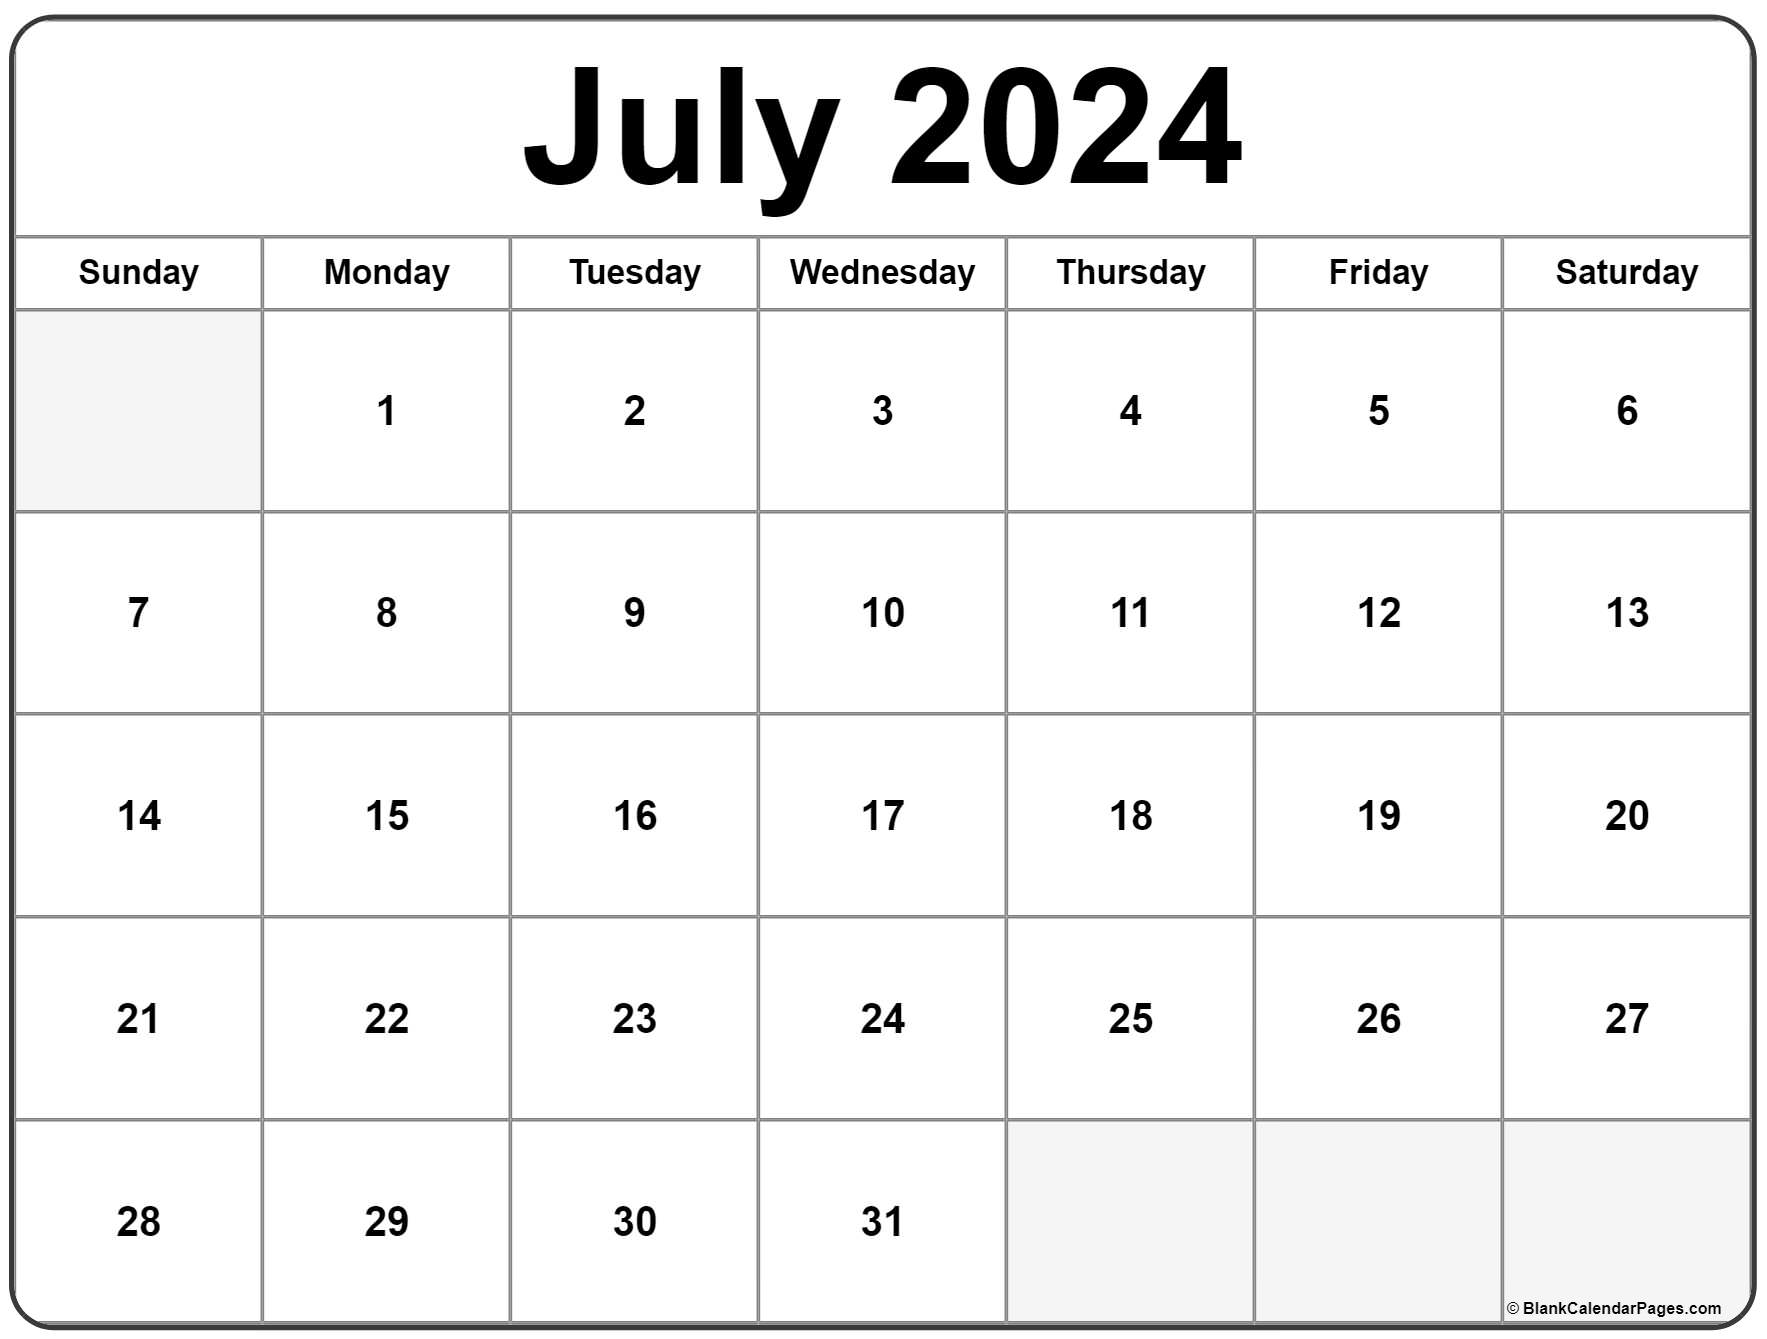 Summer 2022 Calendar July 2022 Calendar | Free Printable Calendar Templates